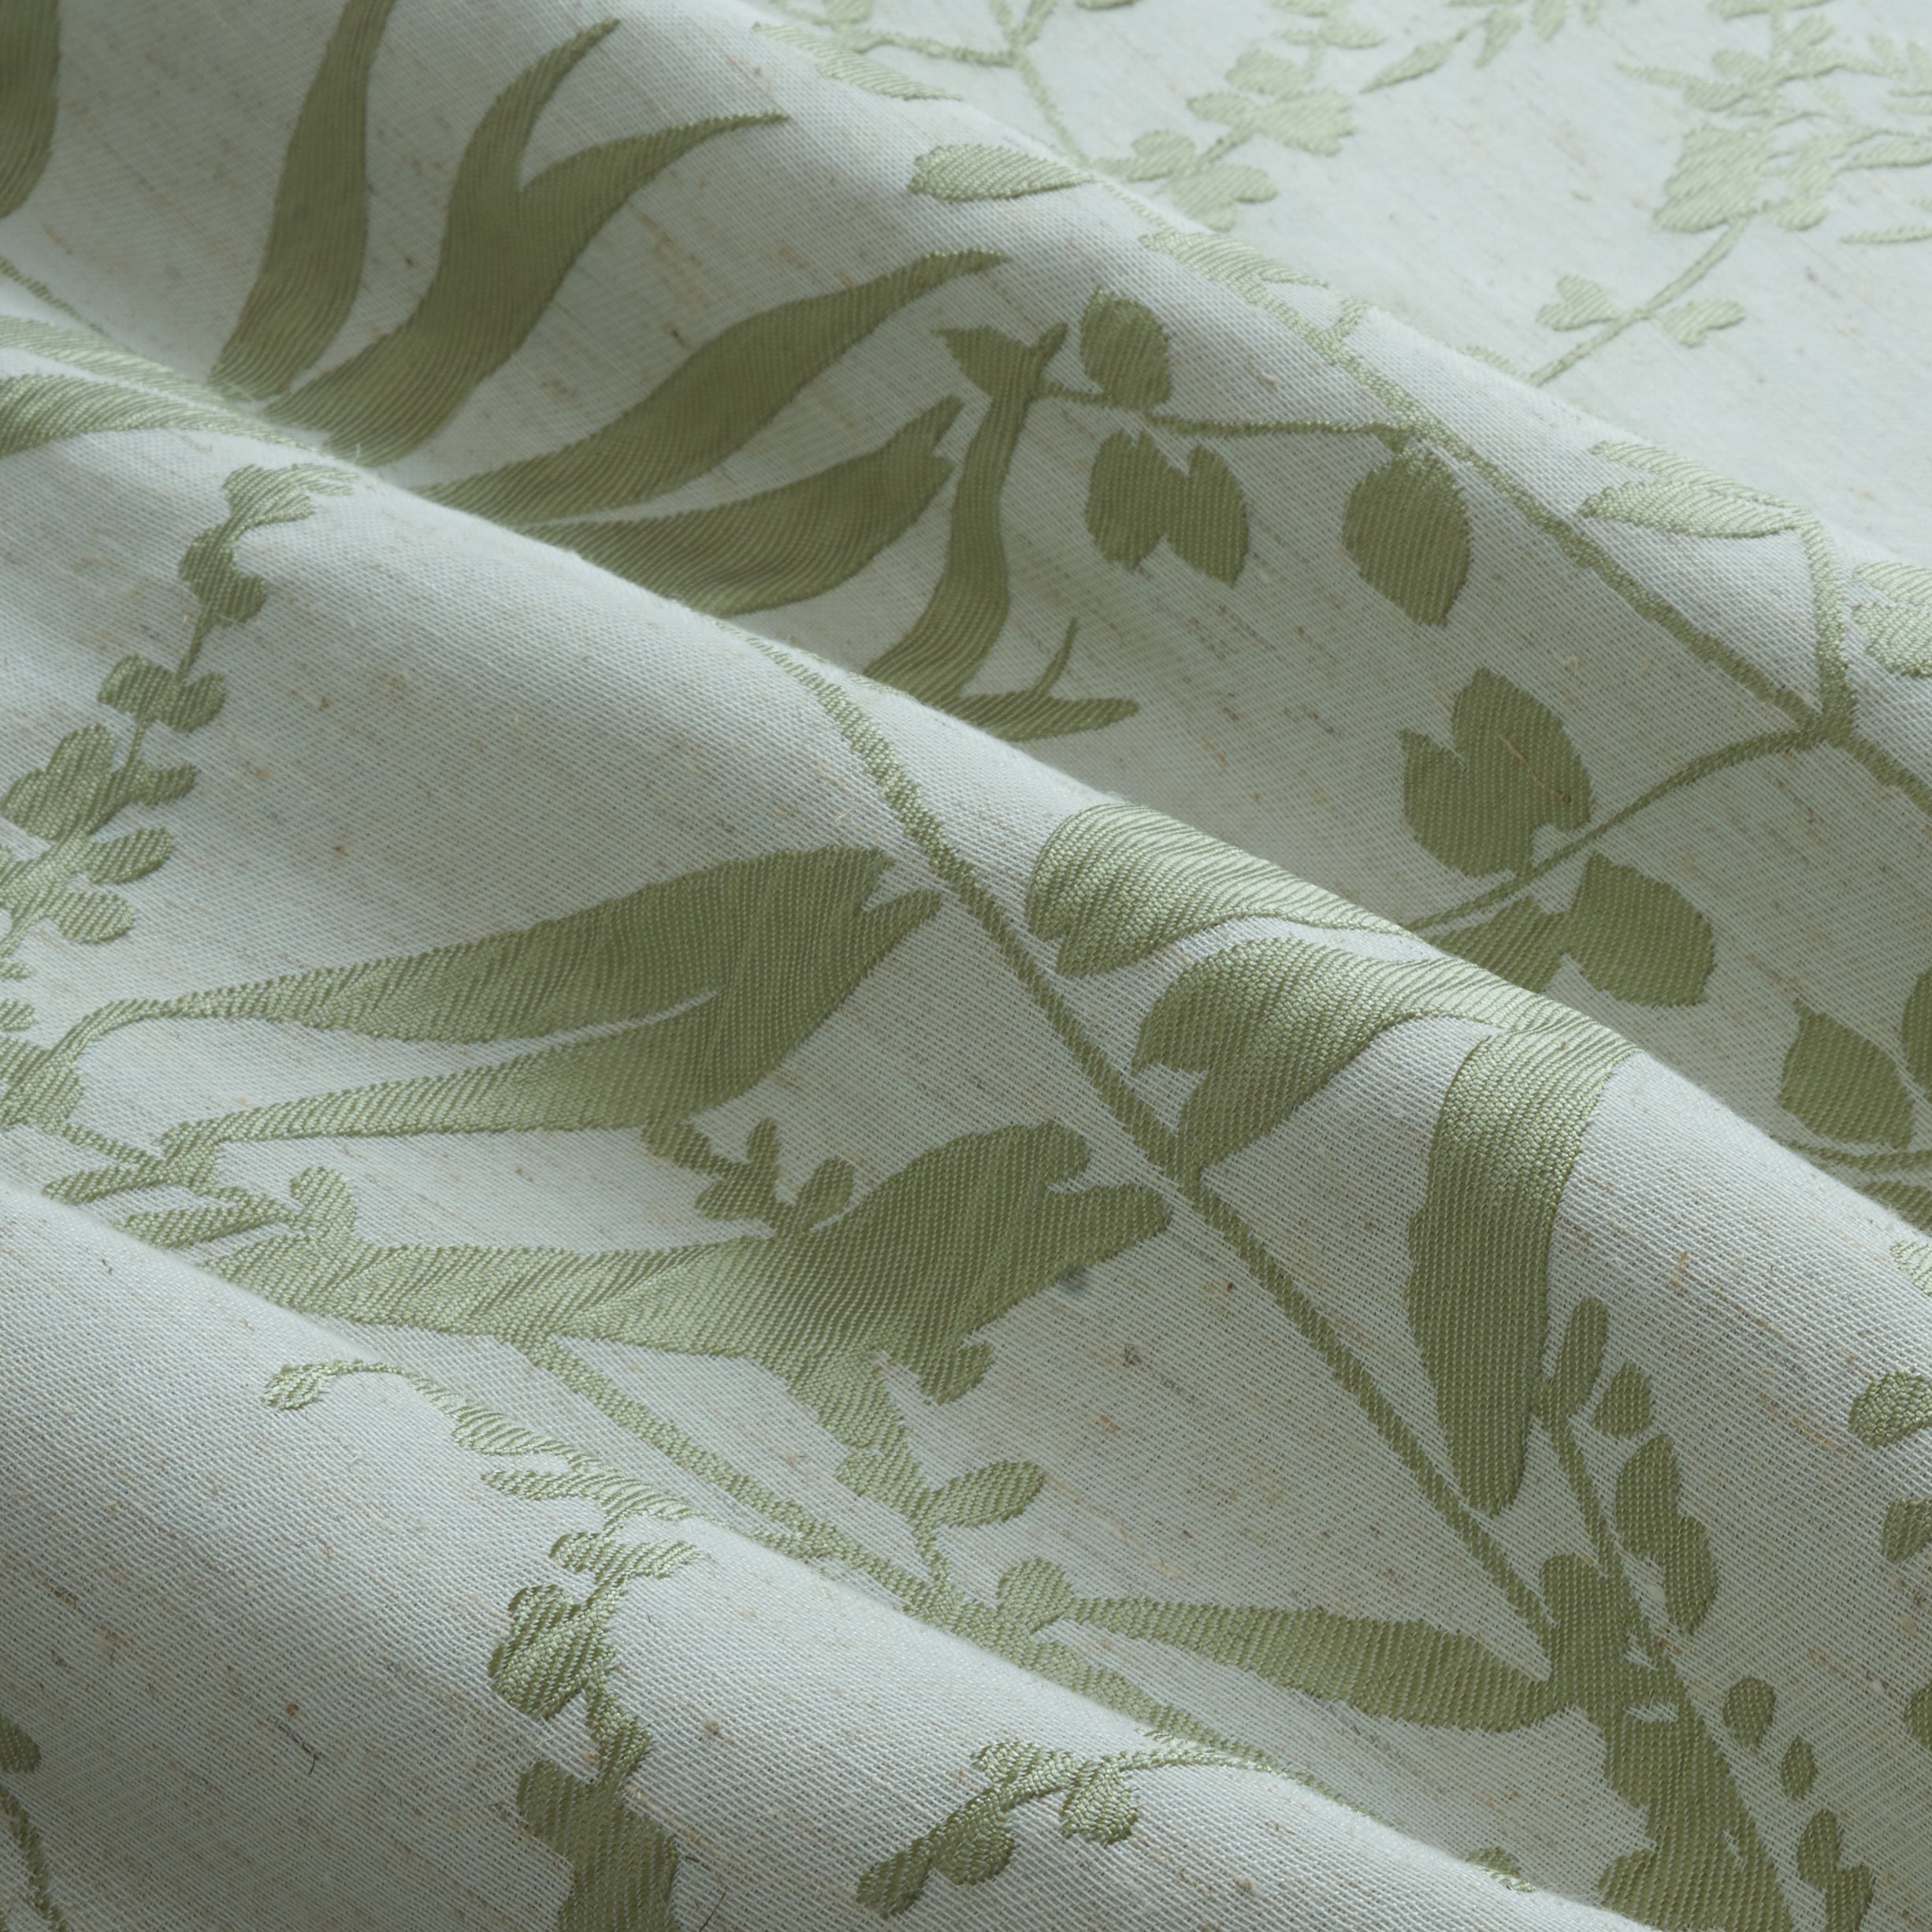 La Jolie Muse Belinda Sage Green Leafy Patterned Velveteen Pillow Cover Set of 2 - Green - S